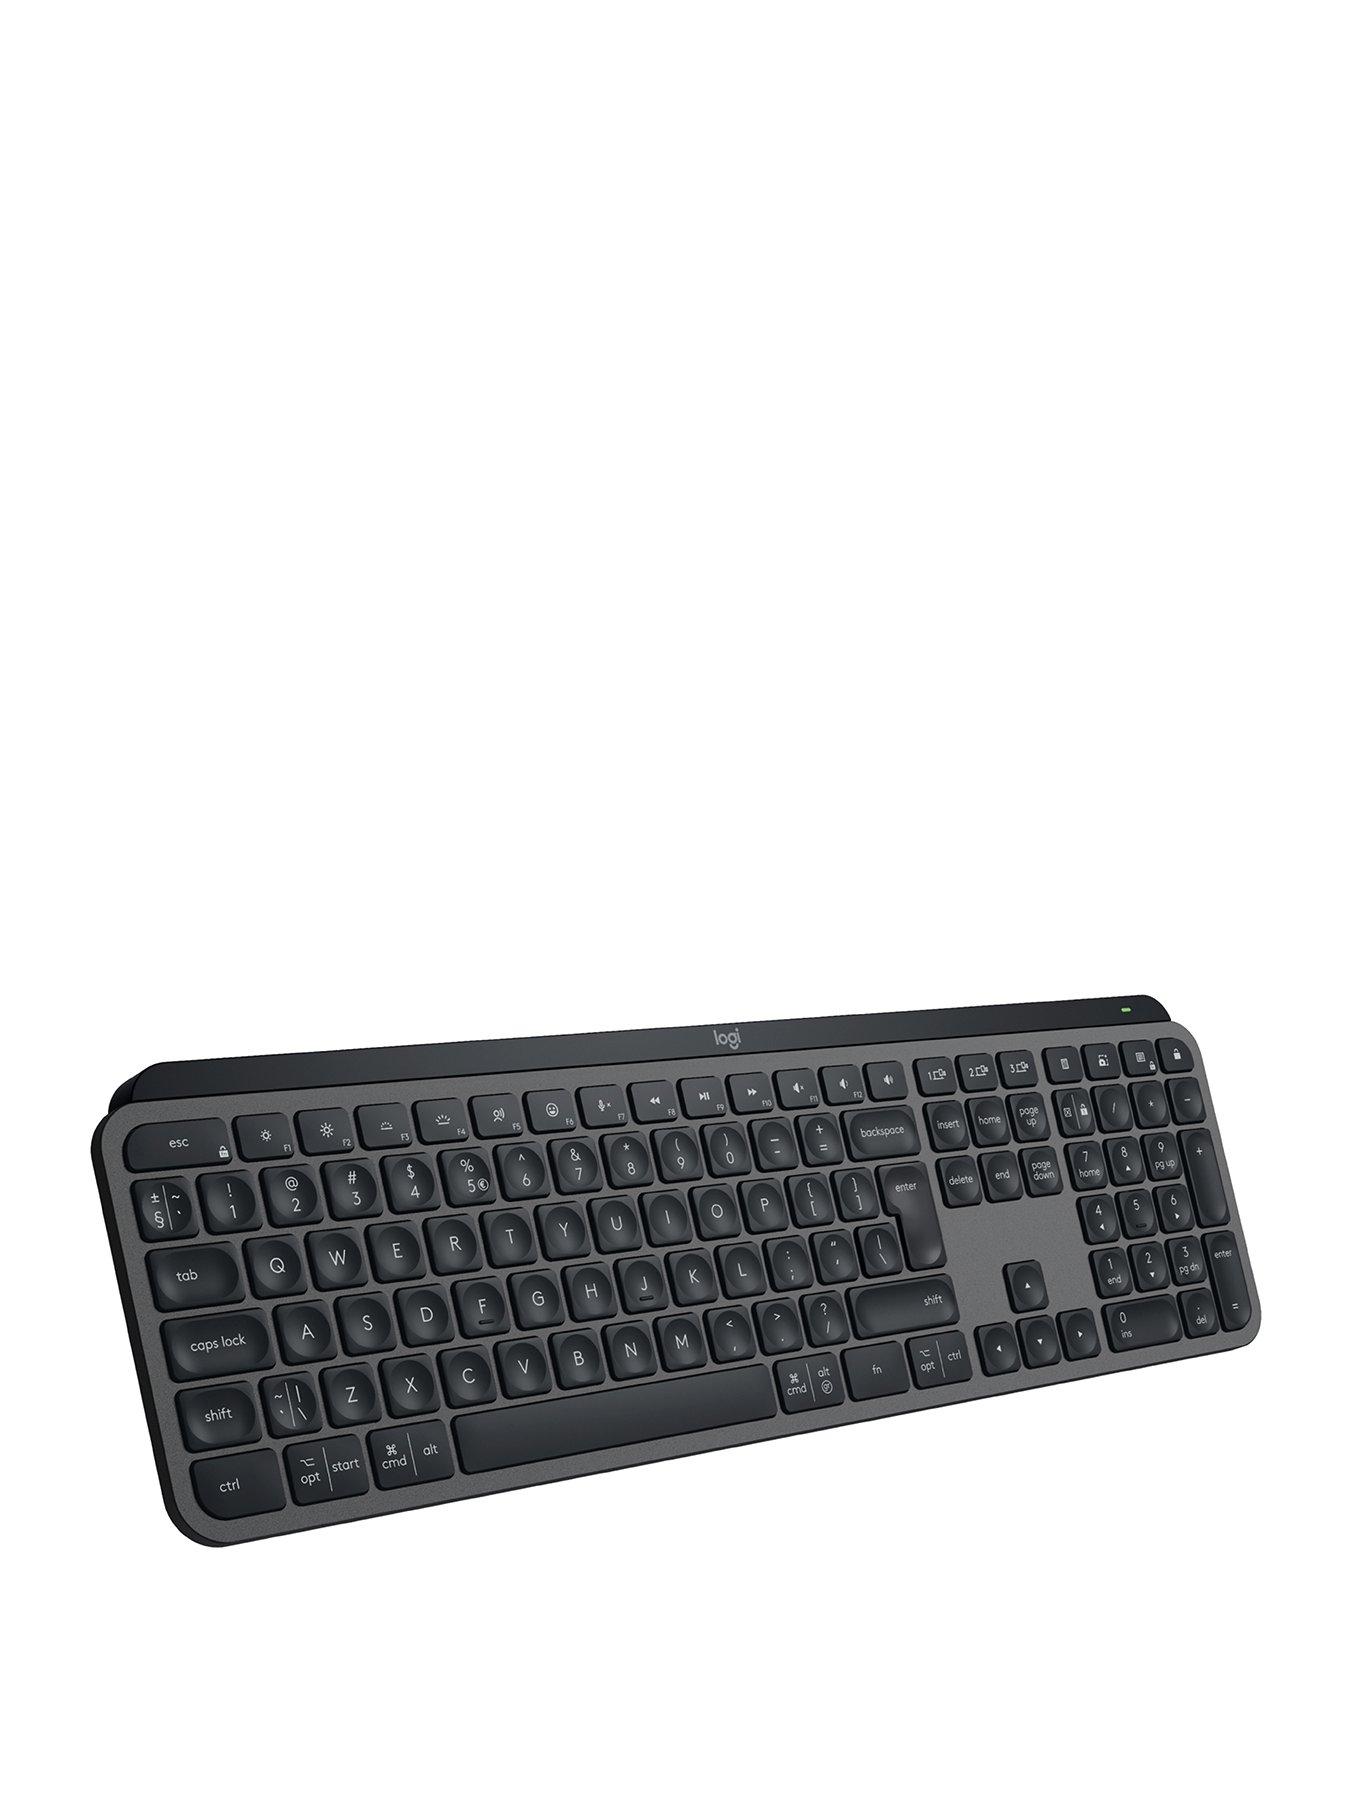 Logitech MX Keys Advanced Wireless Illuminated Keyboard, 10m Range, USB-C  for Windows, Mac, Android, Rechargeable, US International Layout, Graphite